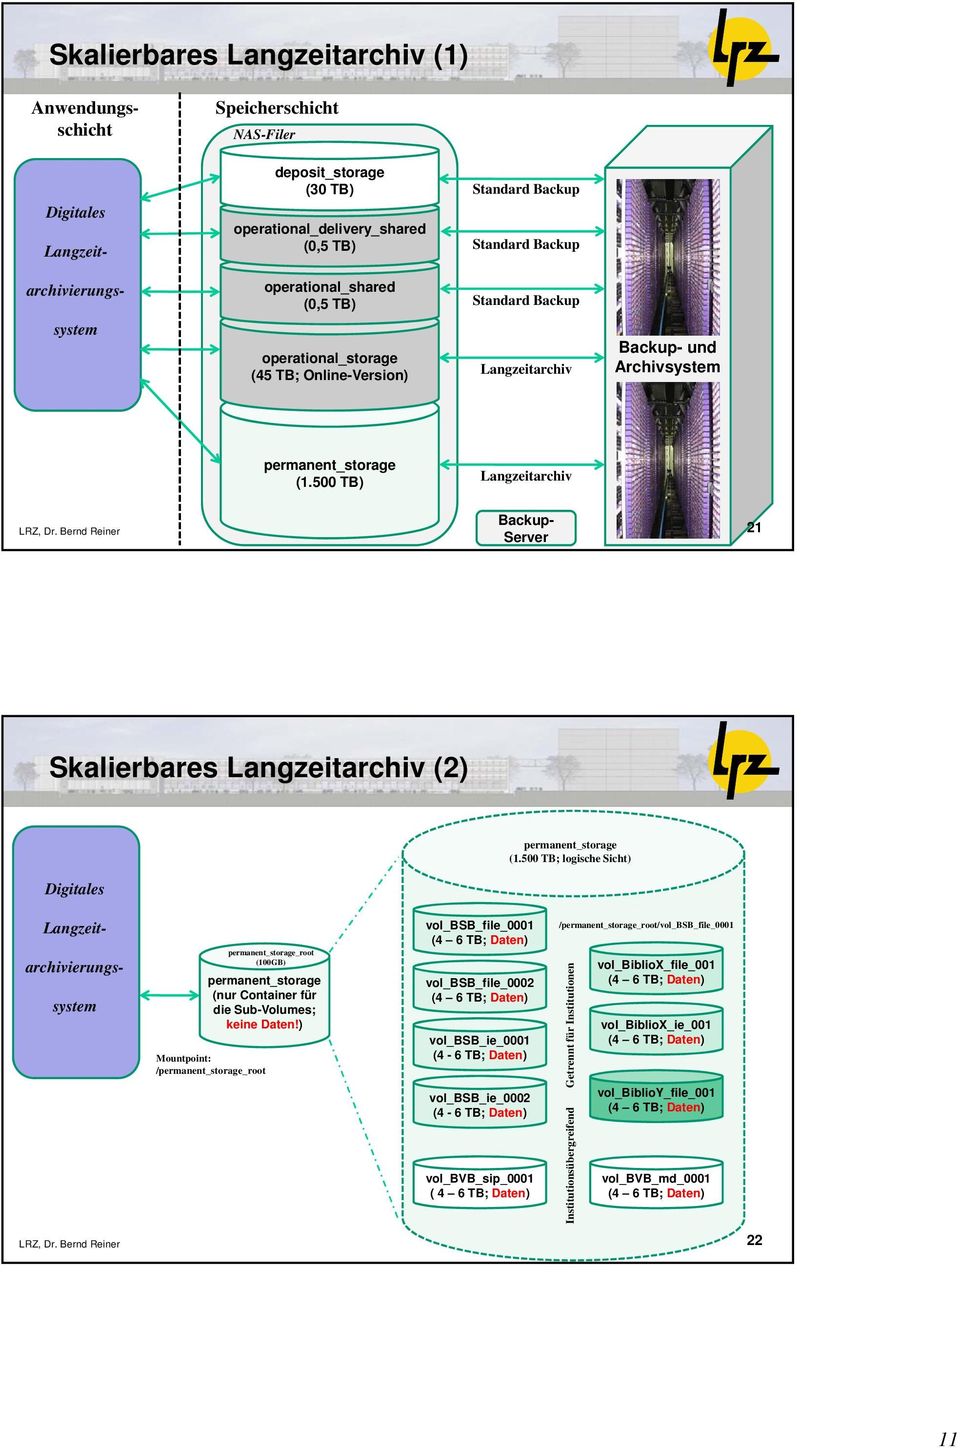 500 TB) Langzeitarchiv Backup- Server 21 Skalierbares Langzeitarchiv (2) Digitales permanent_storage (1.